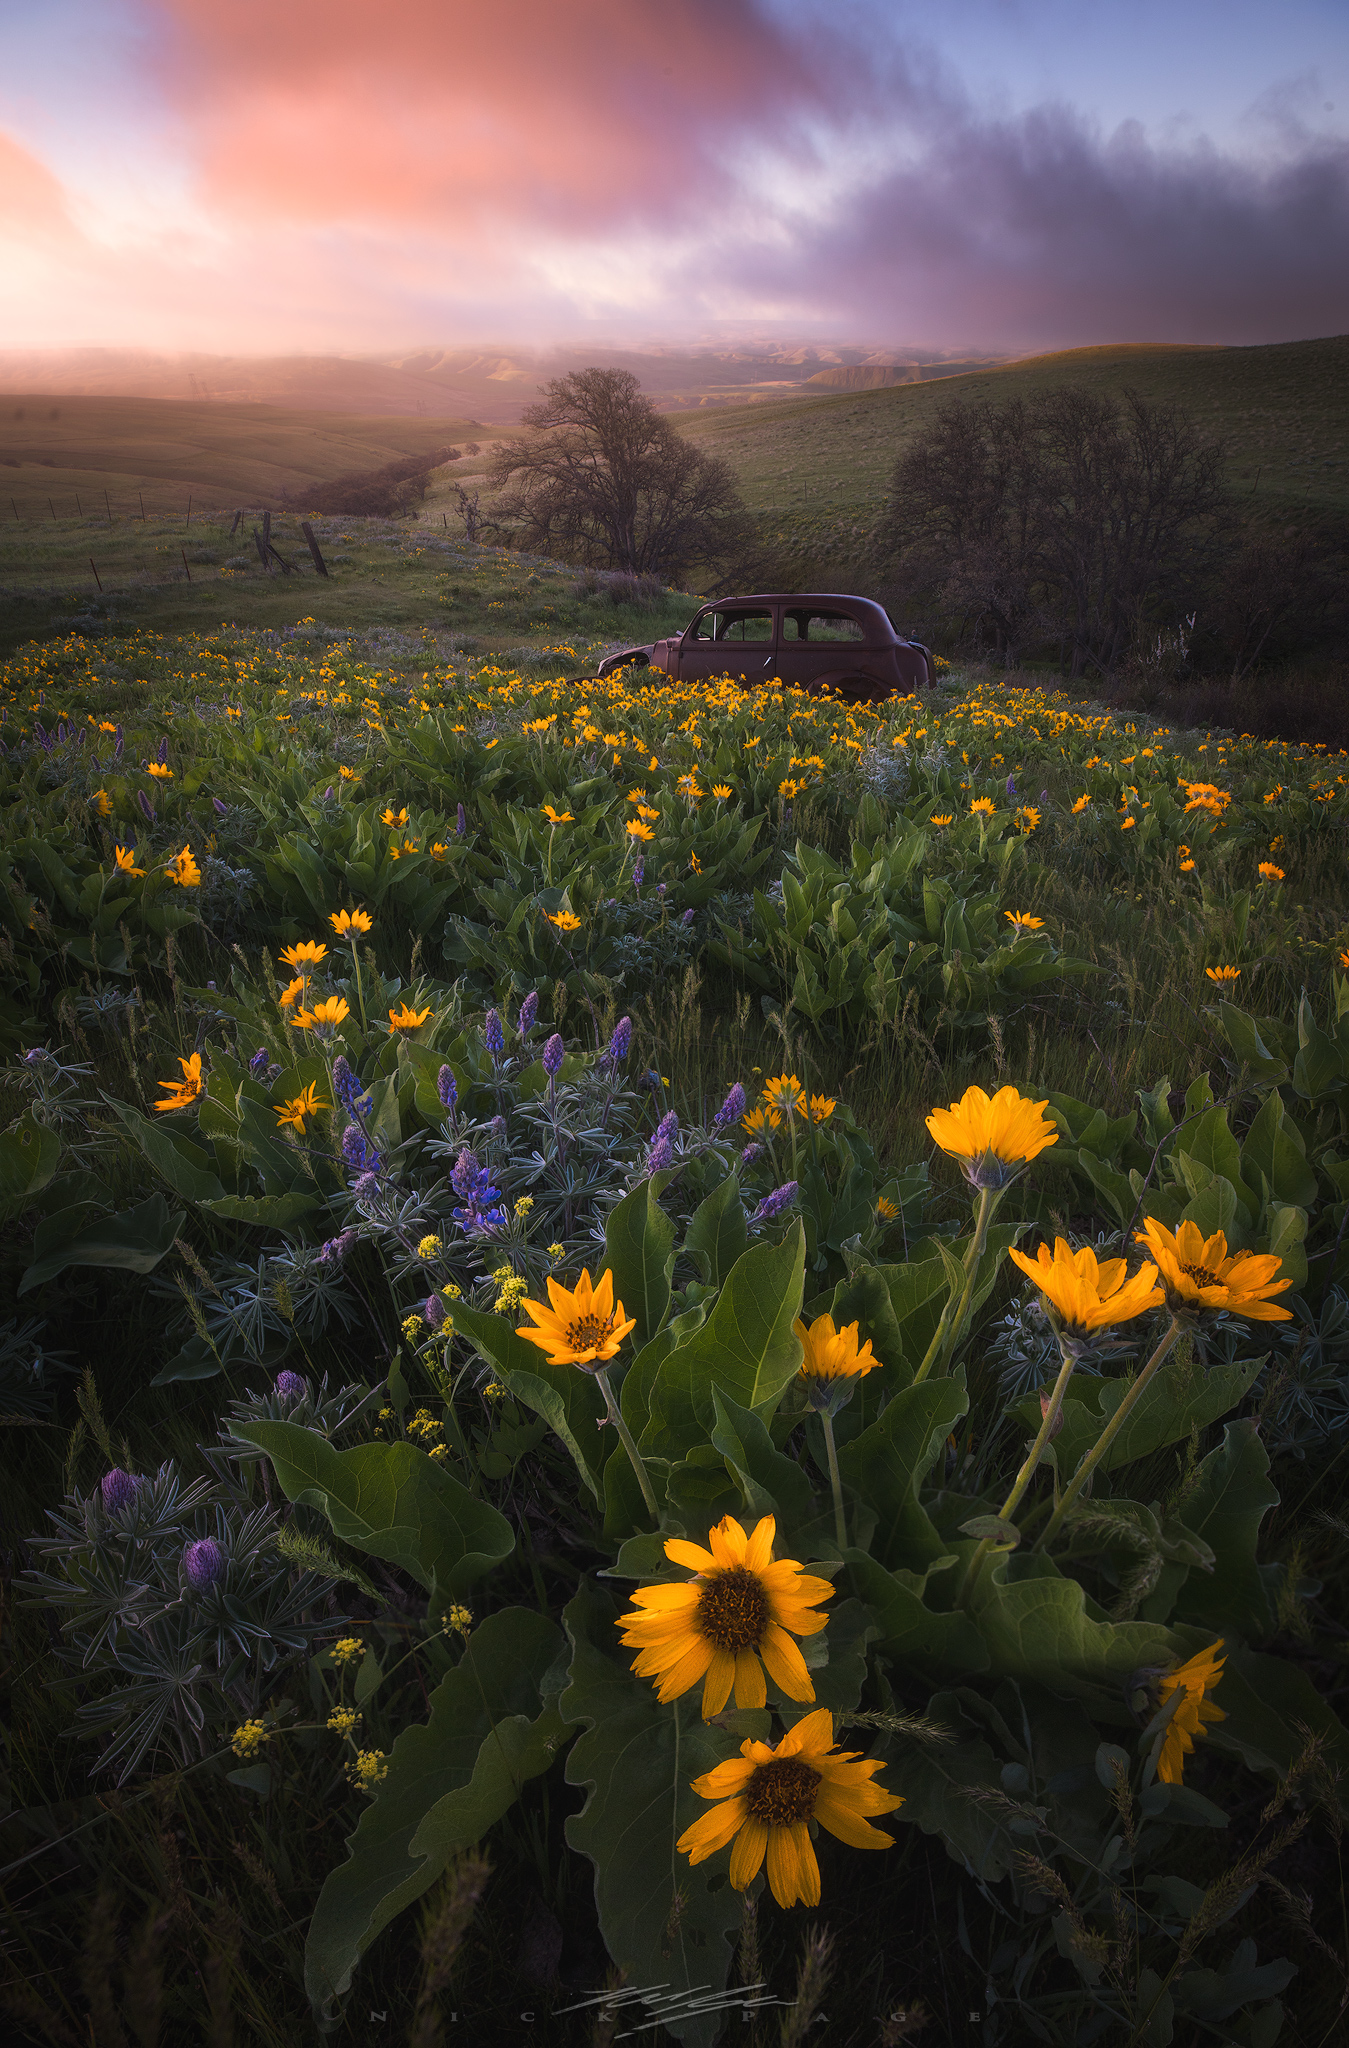 Dalles-mountain-ranch-sunrise.jpg